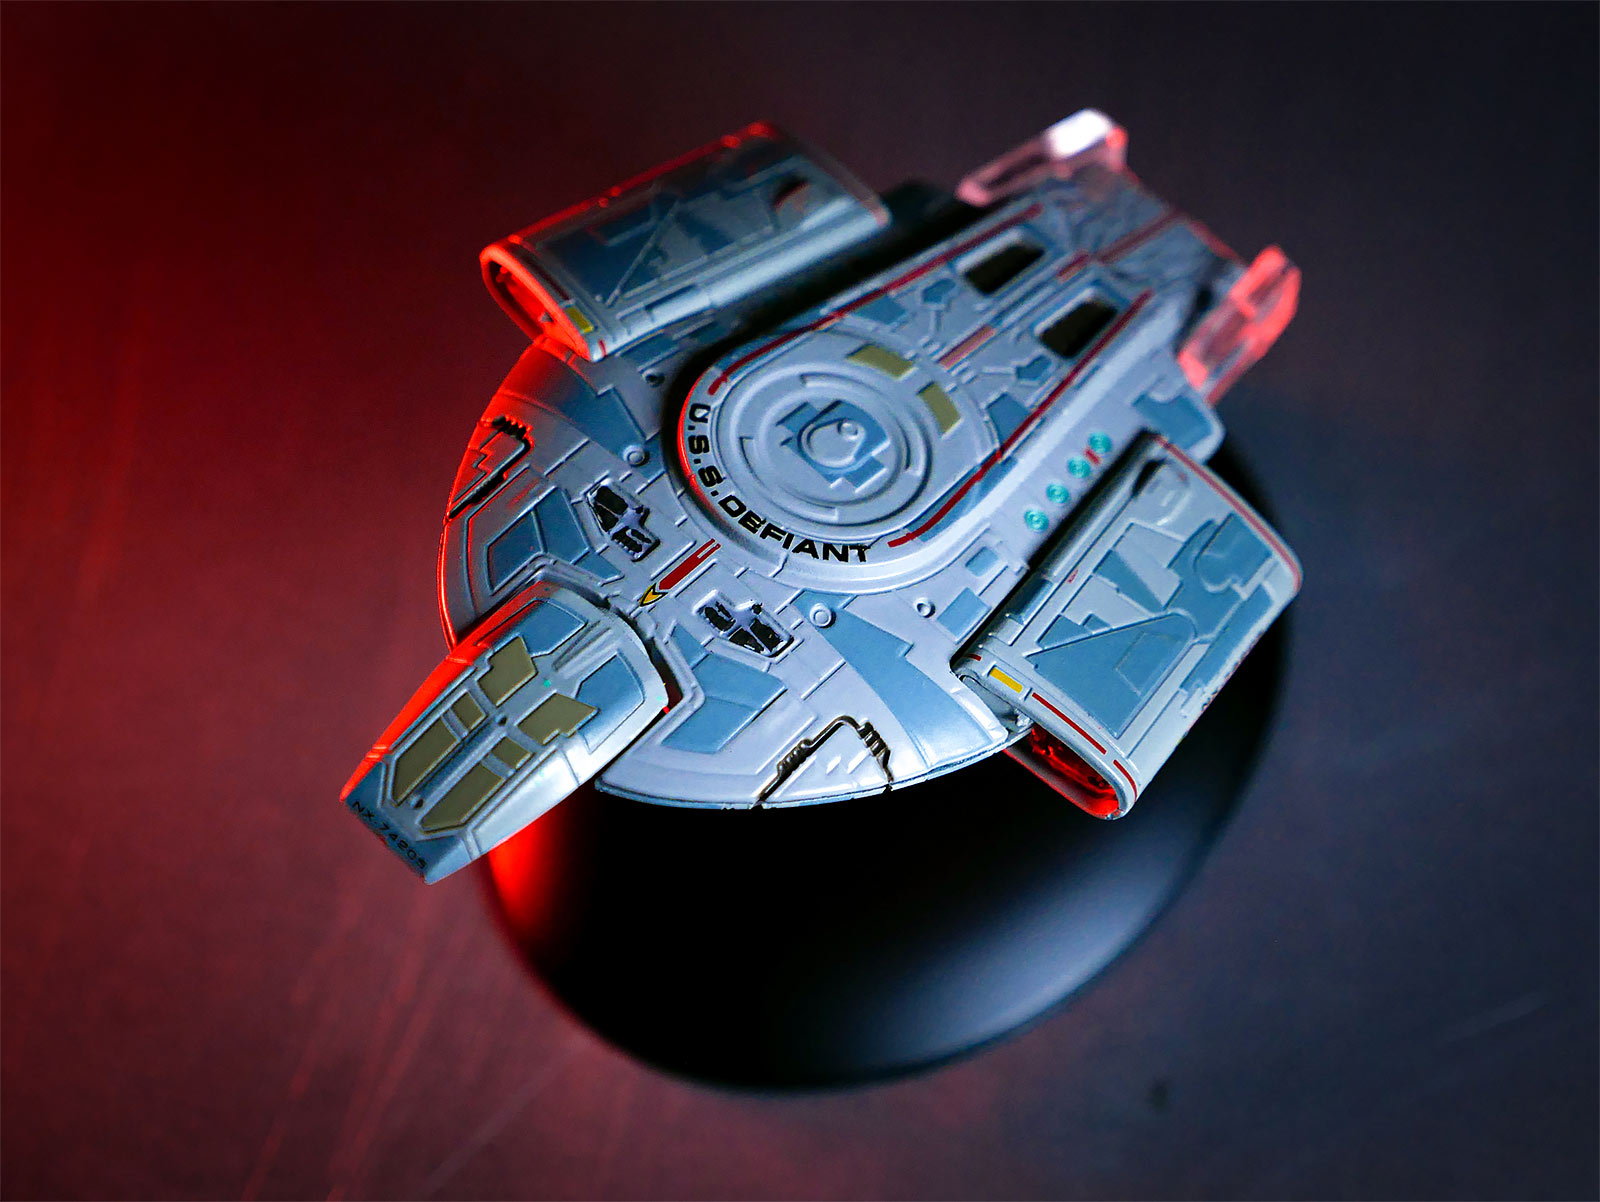 Star Trek - Starship U.S.S. Defiant NX-74205 Hero Collector Figure